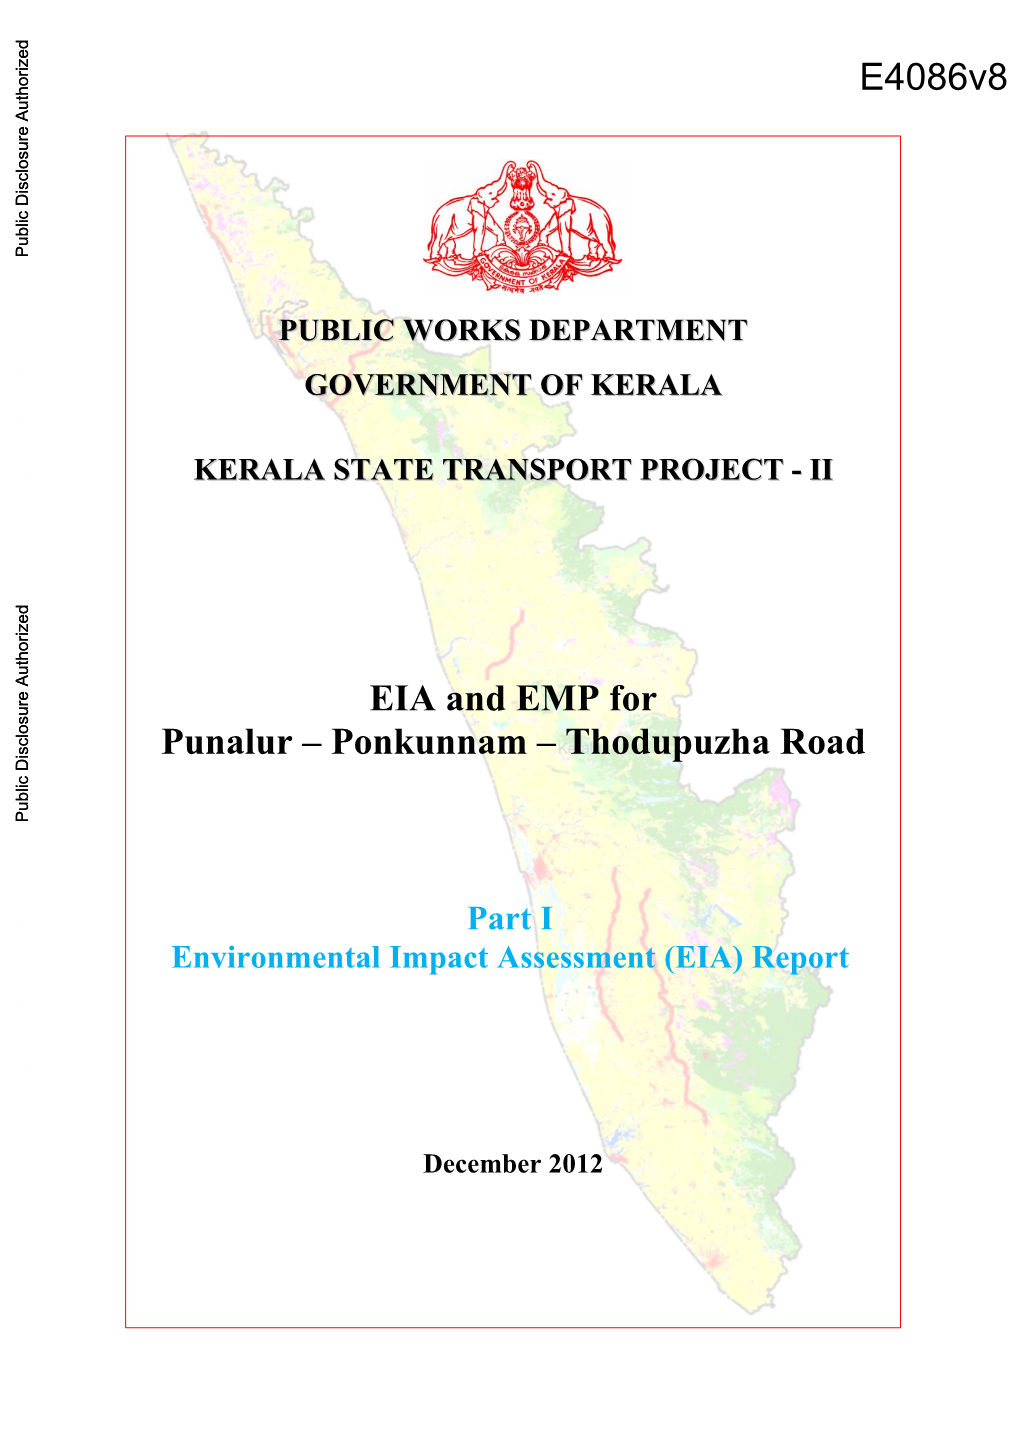 EIA and EMP for Punalur – Ponkunnam – Thodupuzha Road